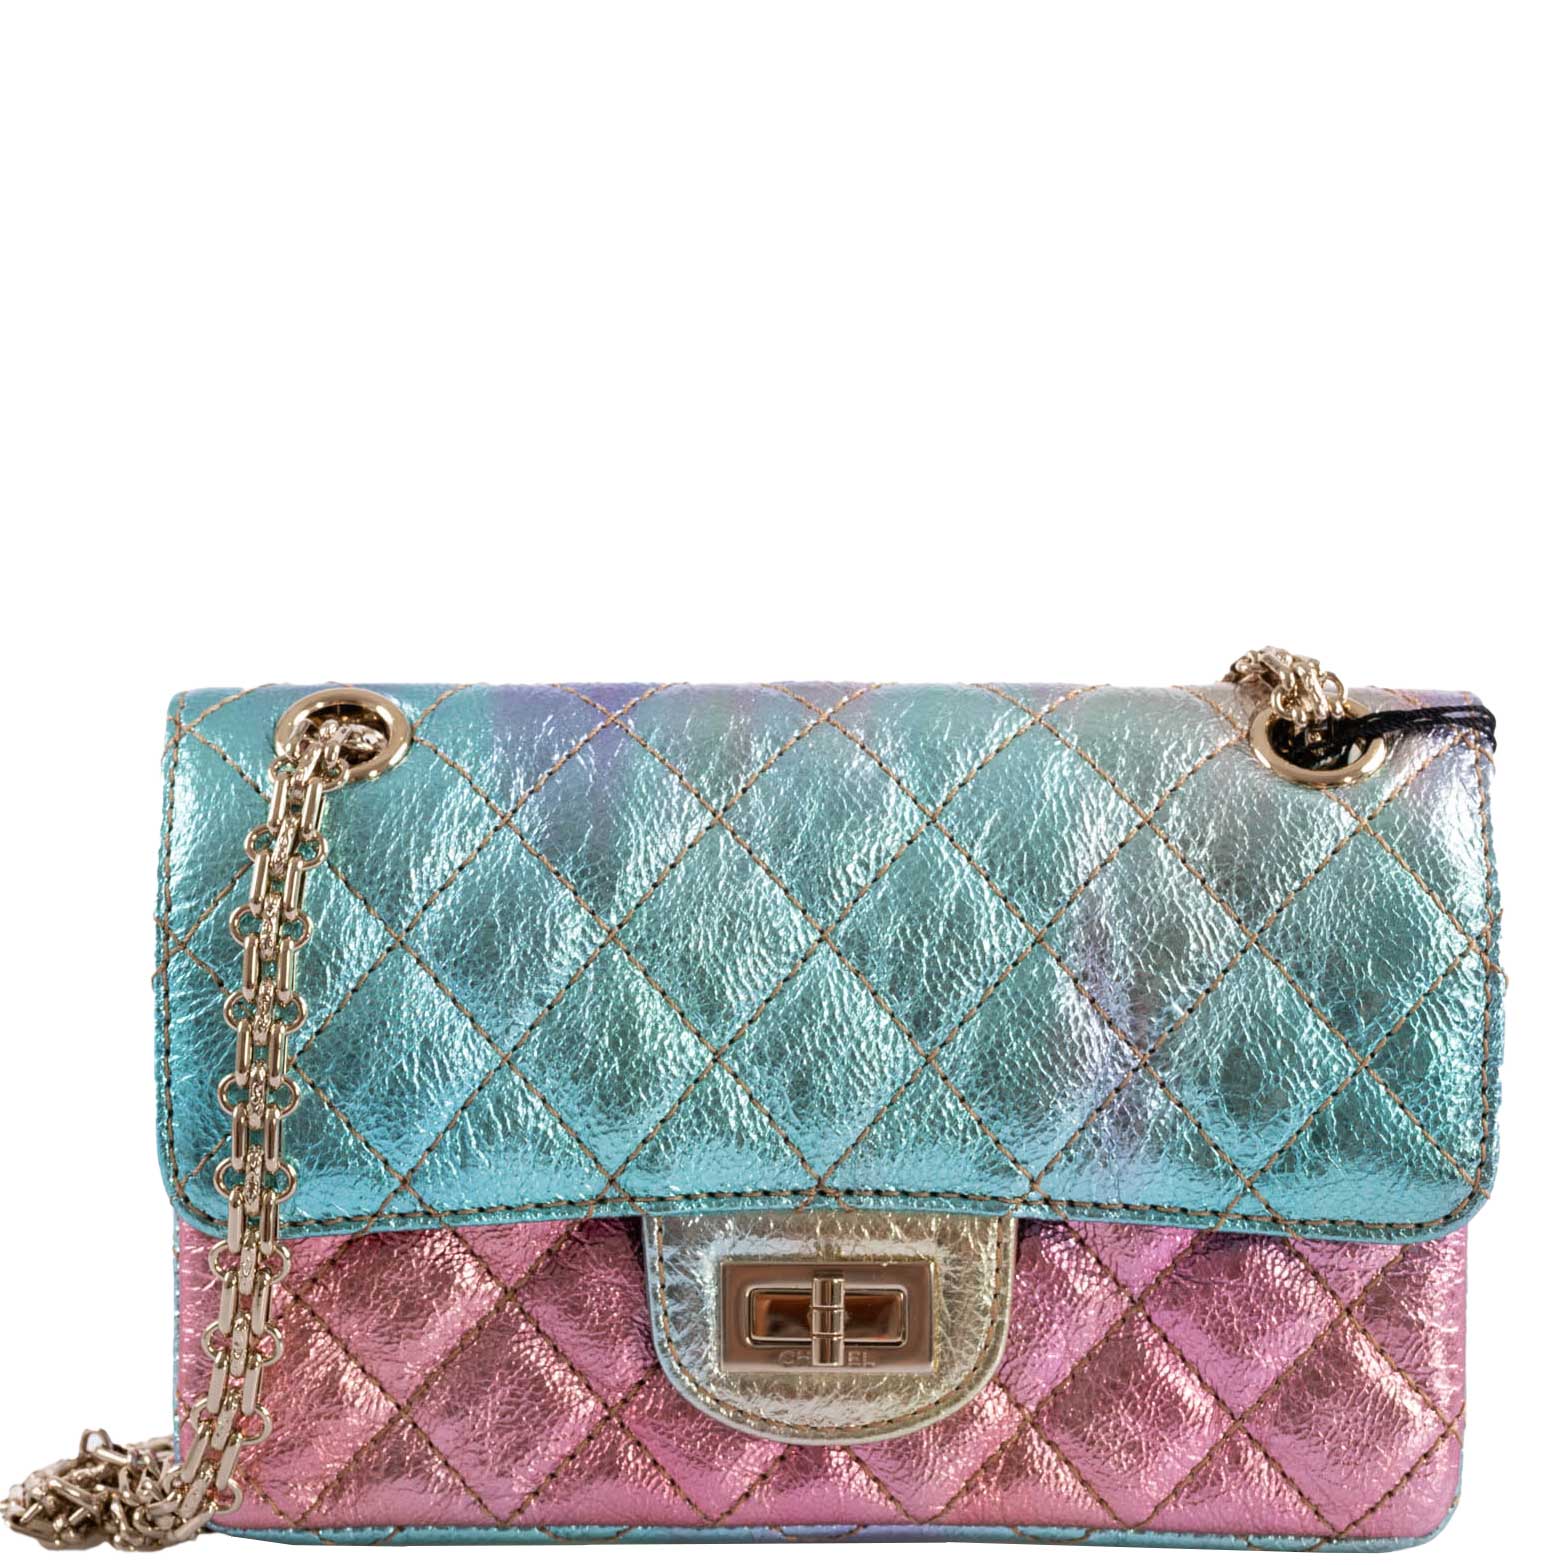 Chanel 2.55 mini  Girly bags, Chanel wallet, Chanel bag